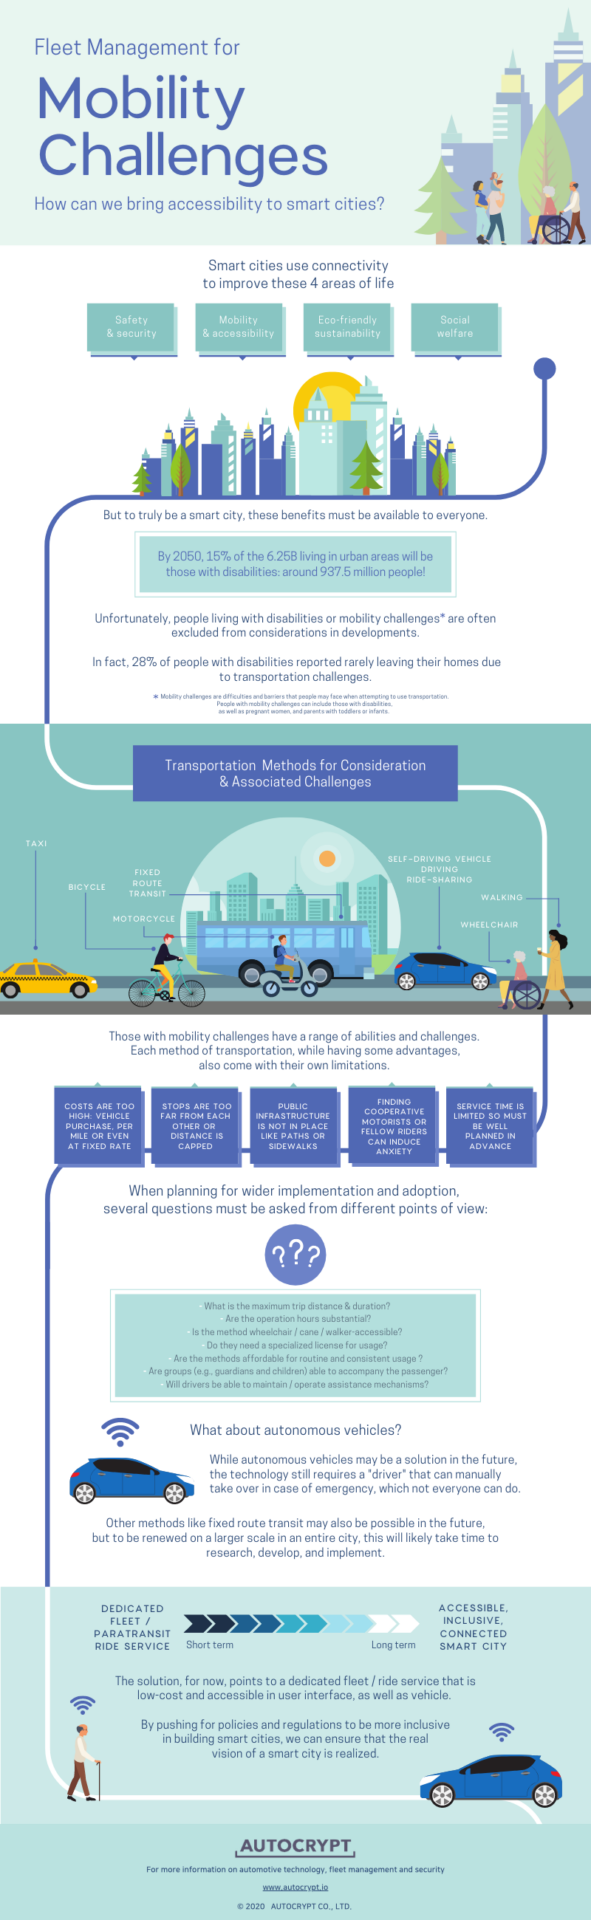 mobility challenge fleet management infographic